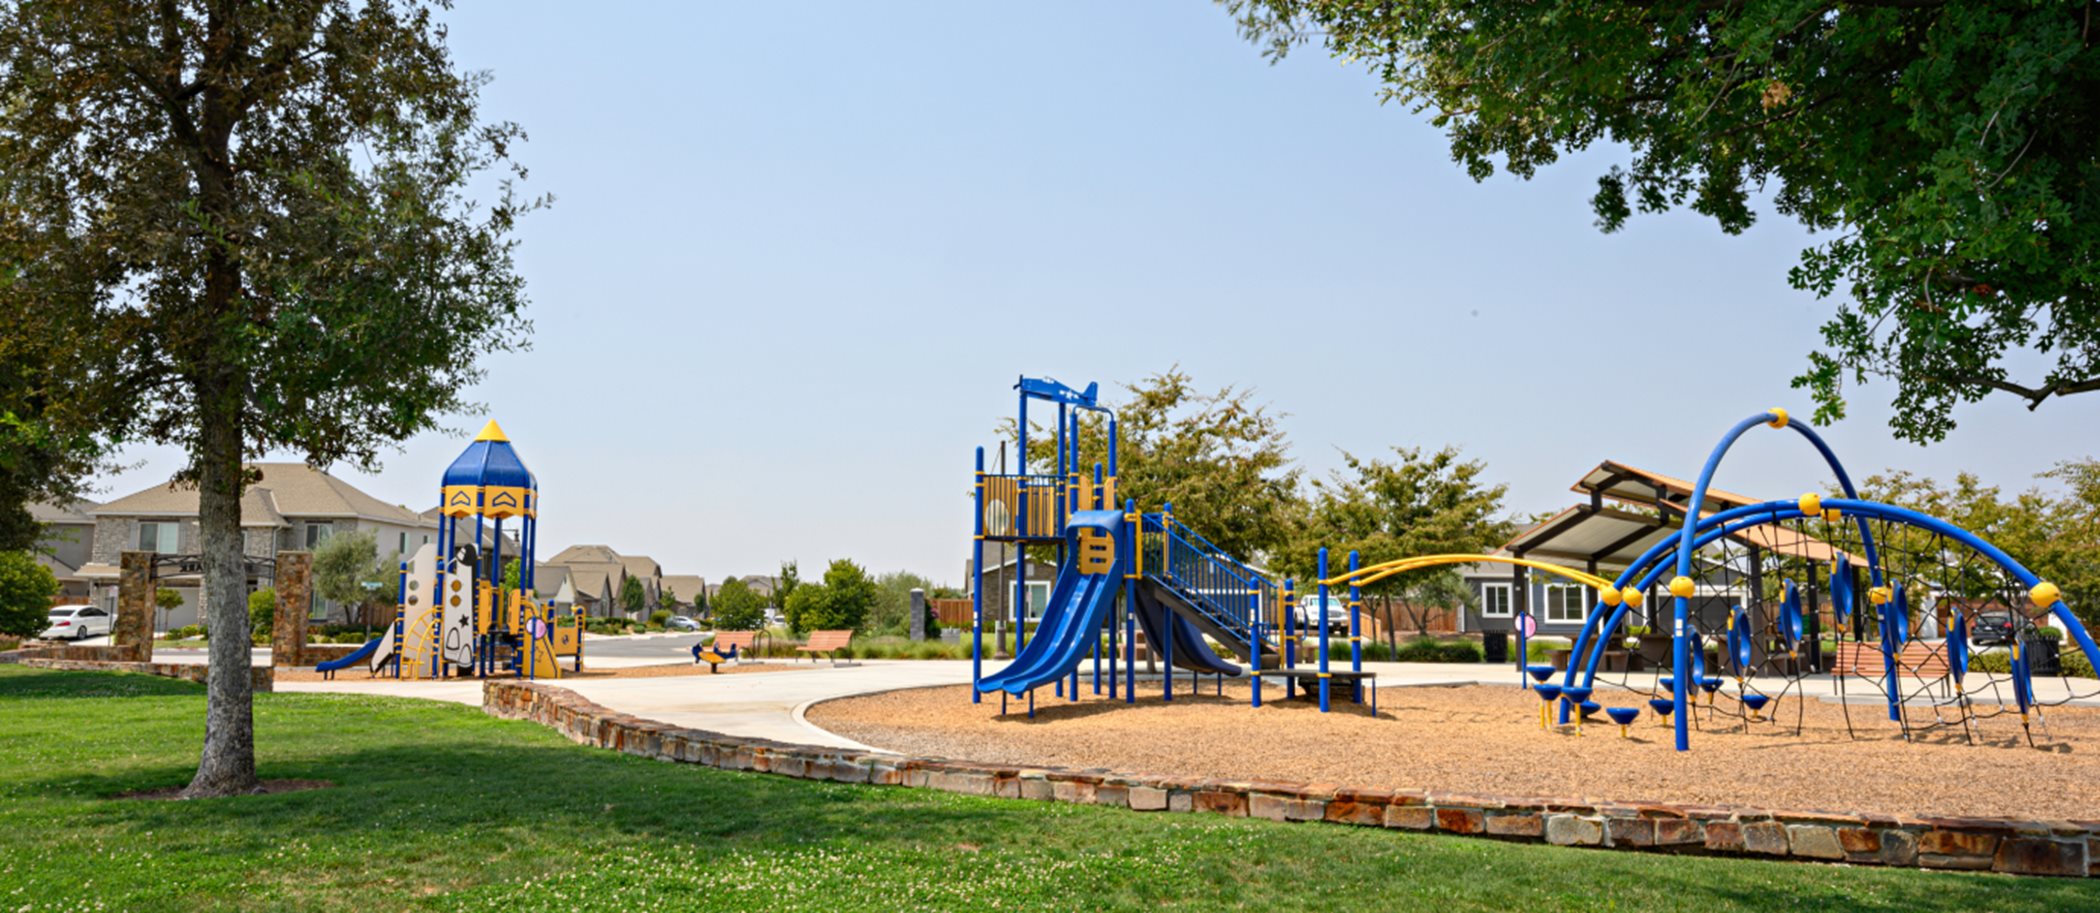 Gossamer Grove Playground